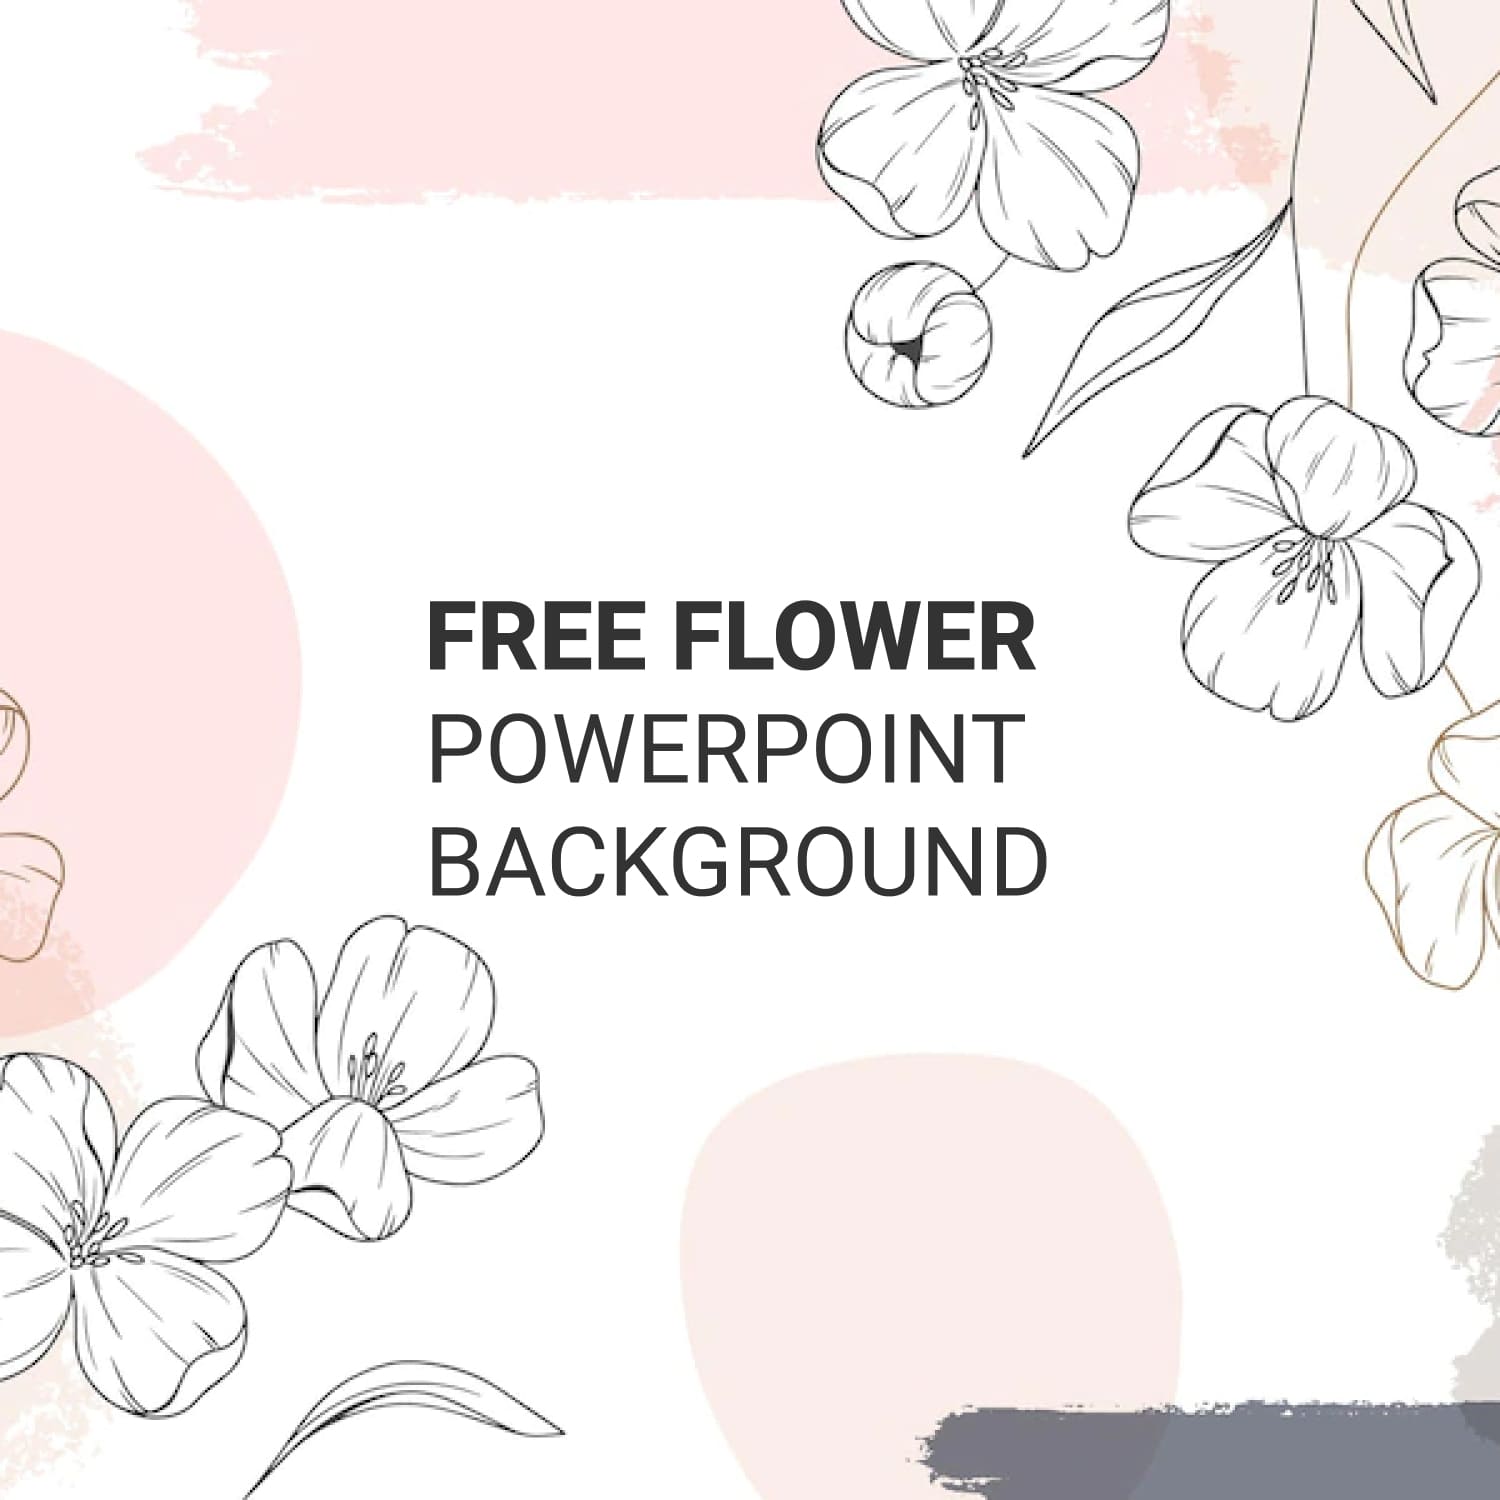 Free Flower Powerpoint Background.